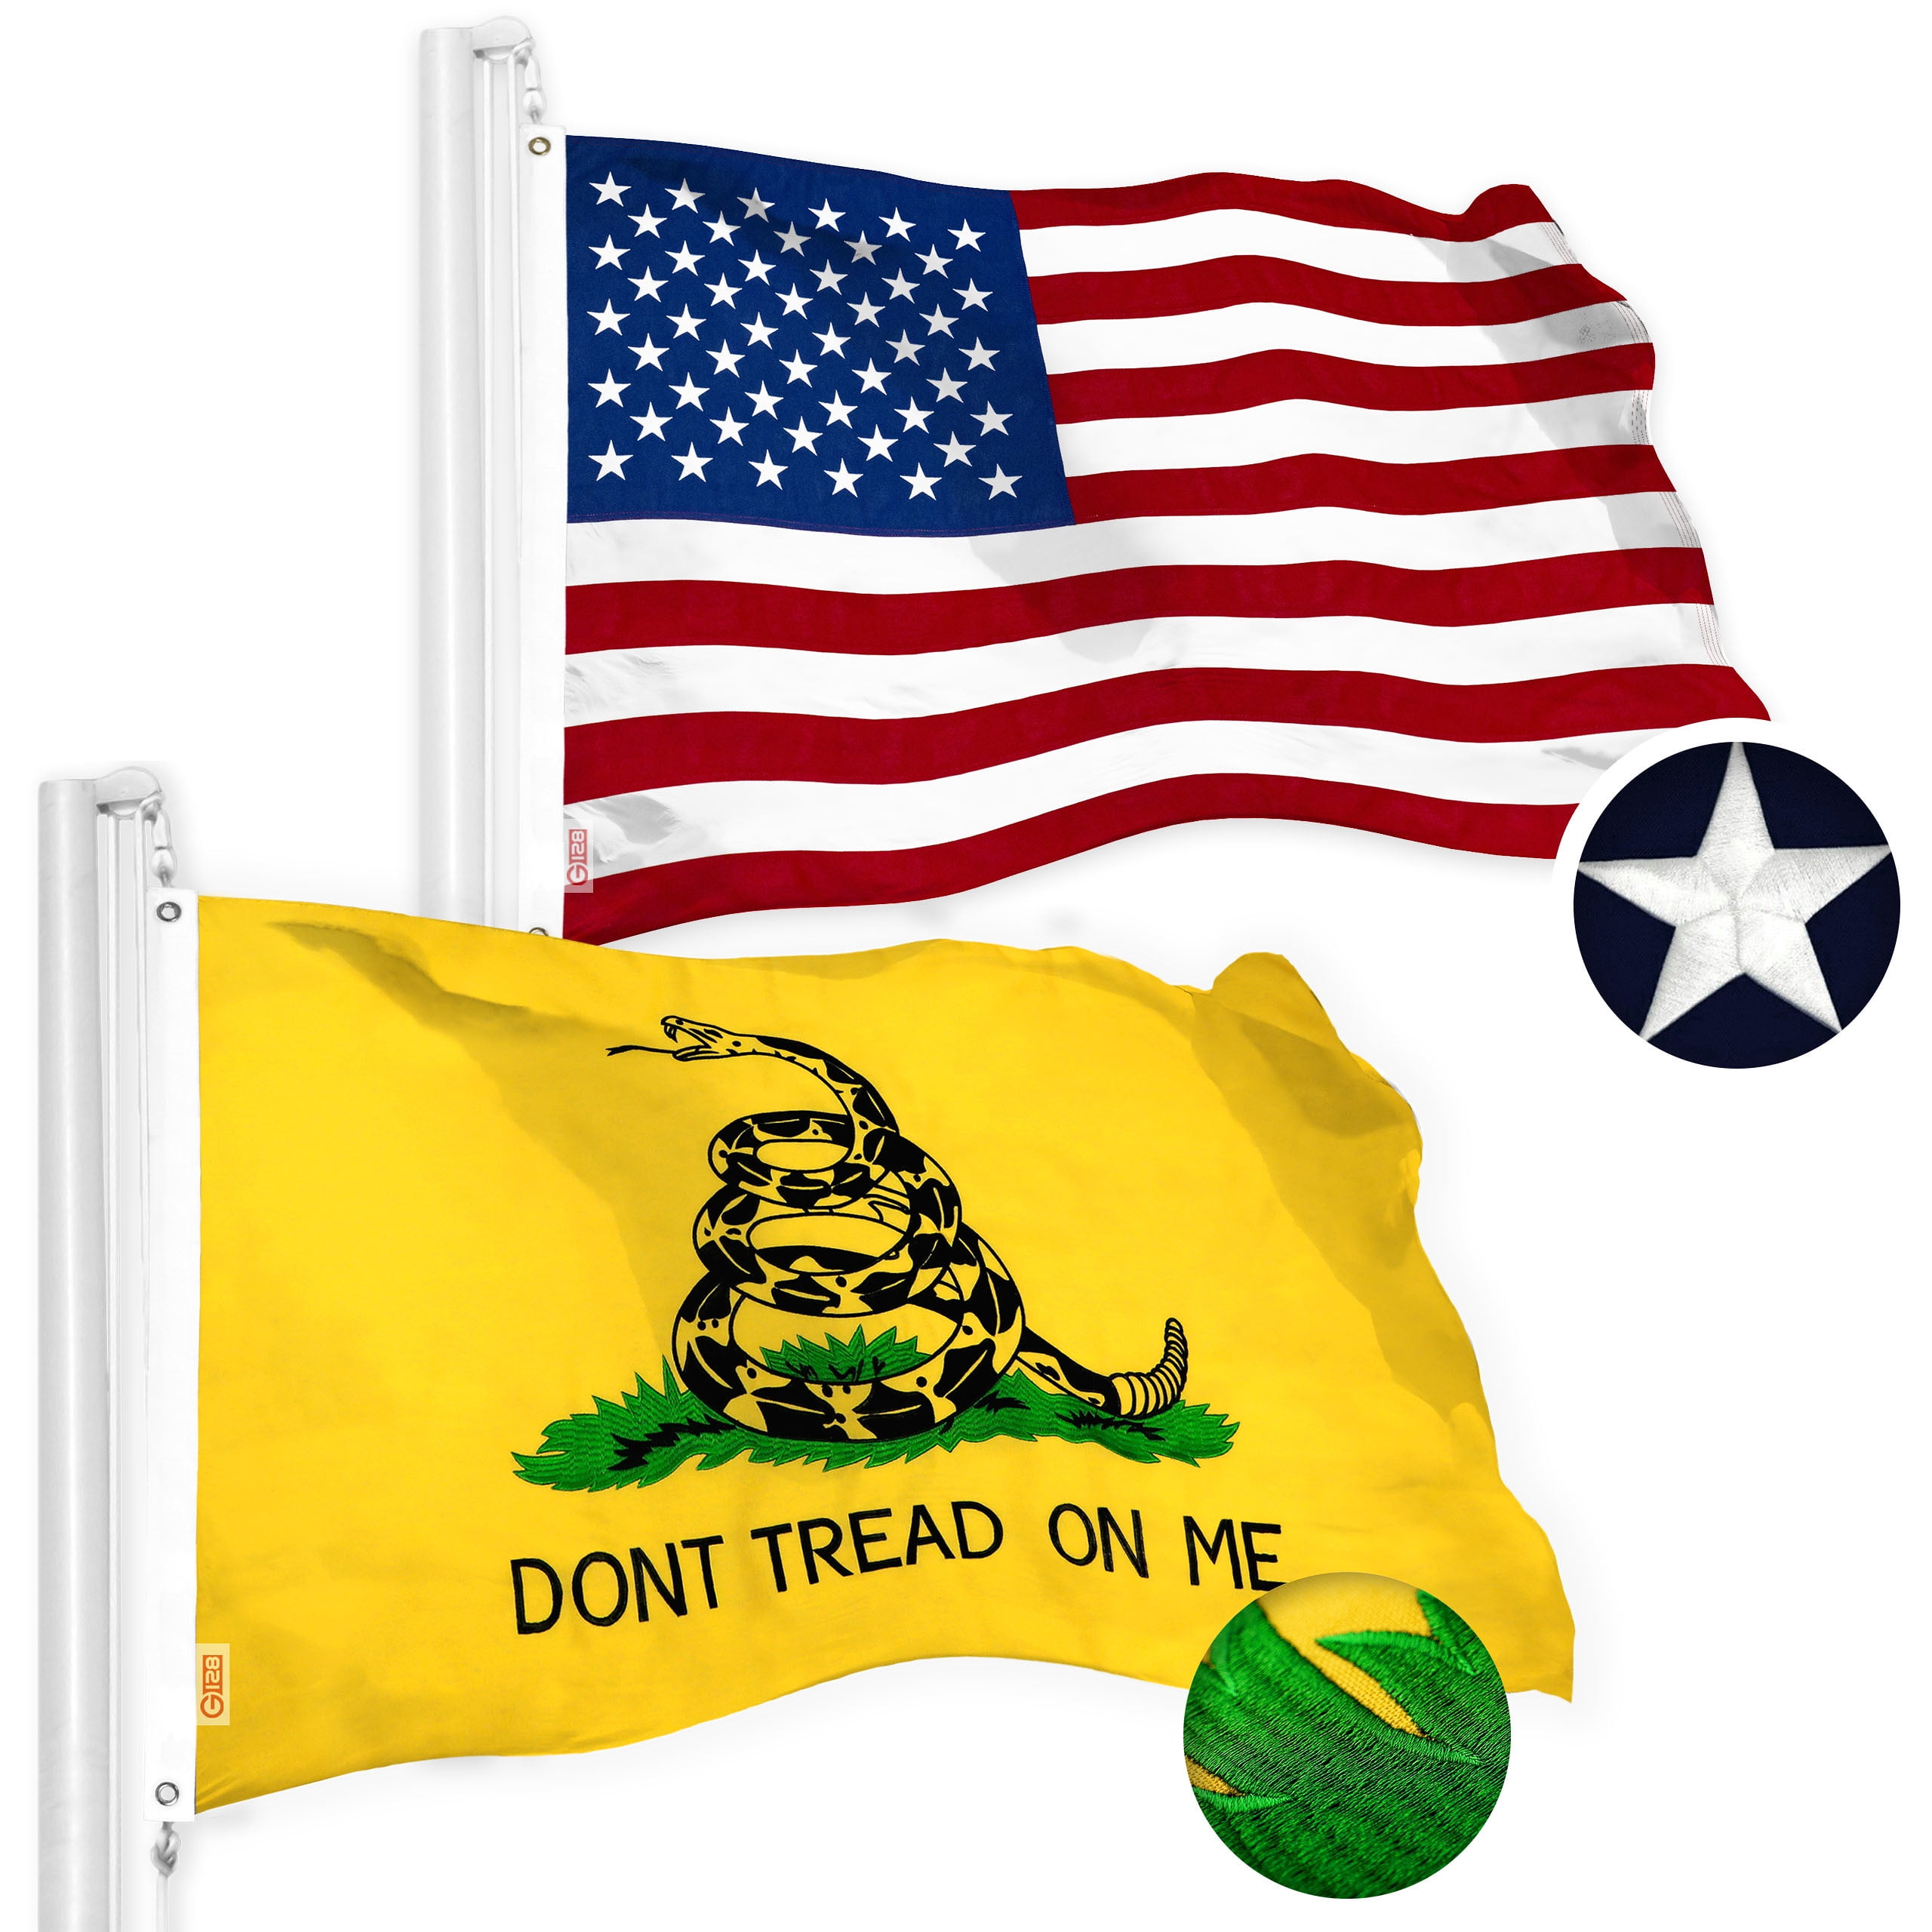 USA GADSEN Don't trend on me US flag 3 X 5 FEET NEW  